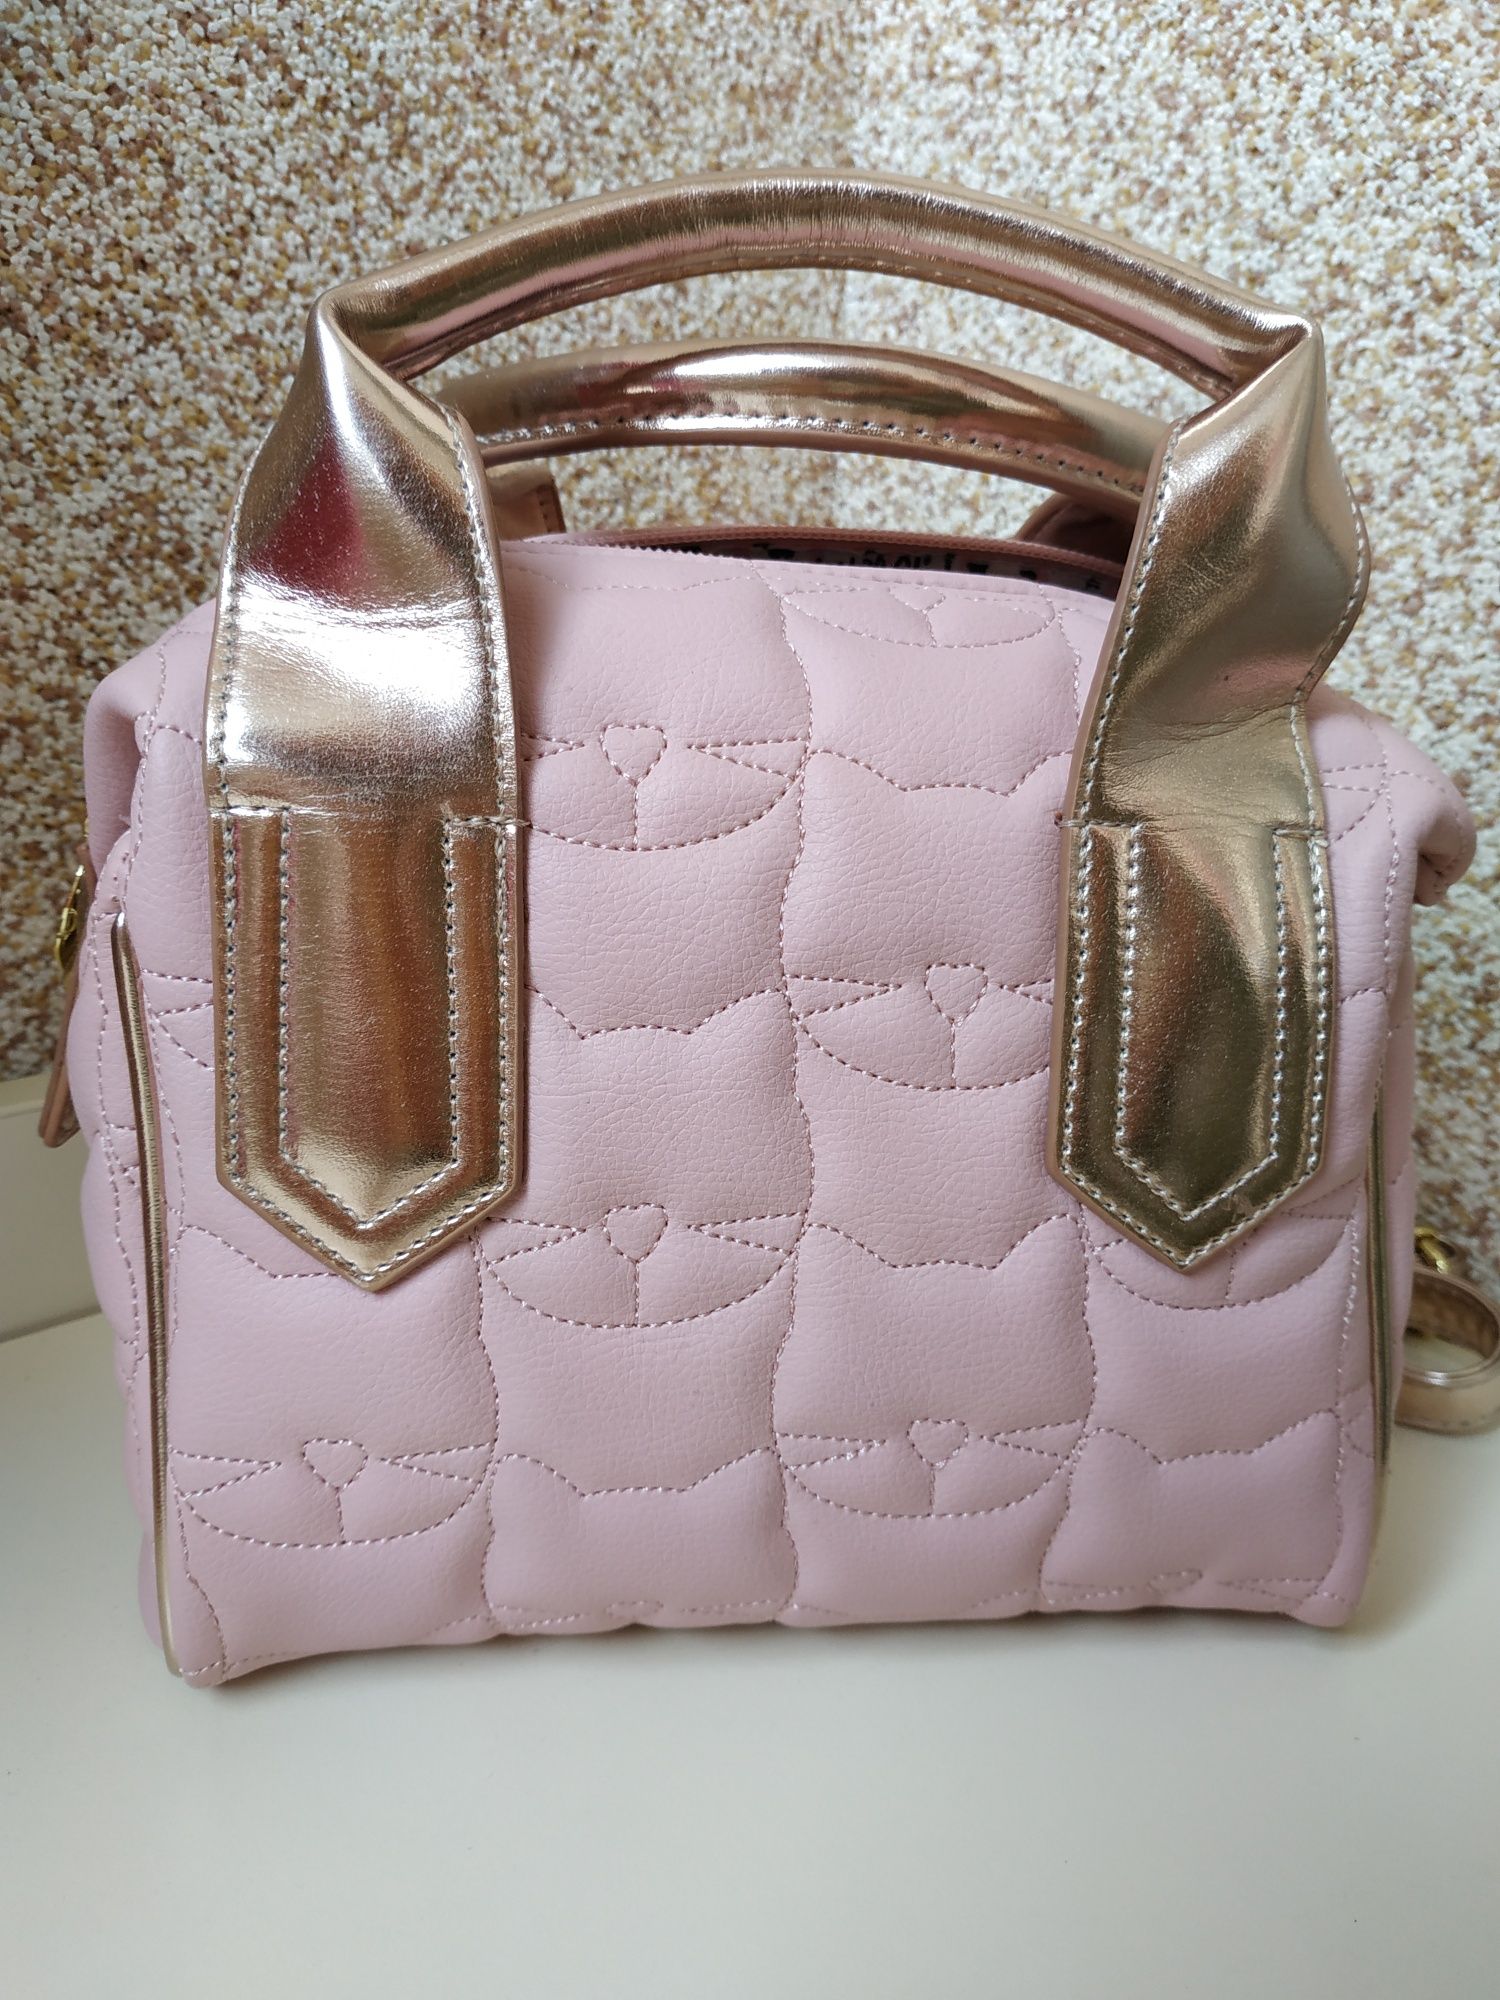 Новая сумочка Betsey Johnson розовая/розовое золото